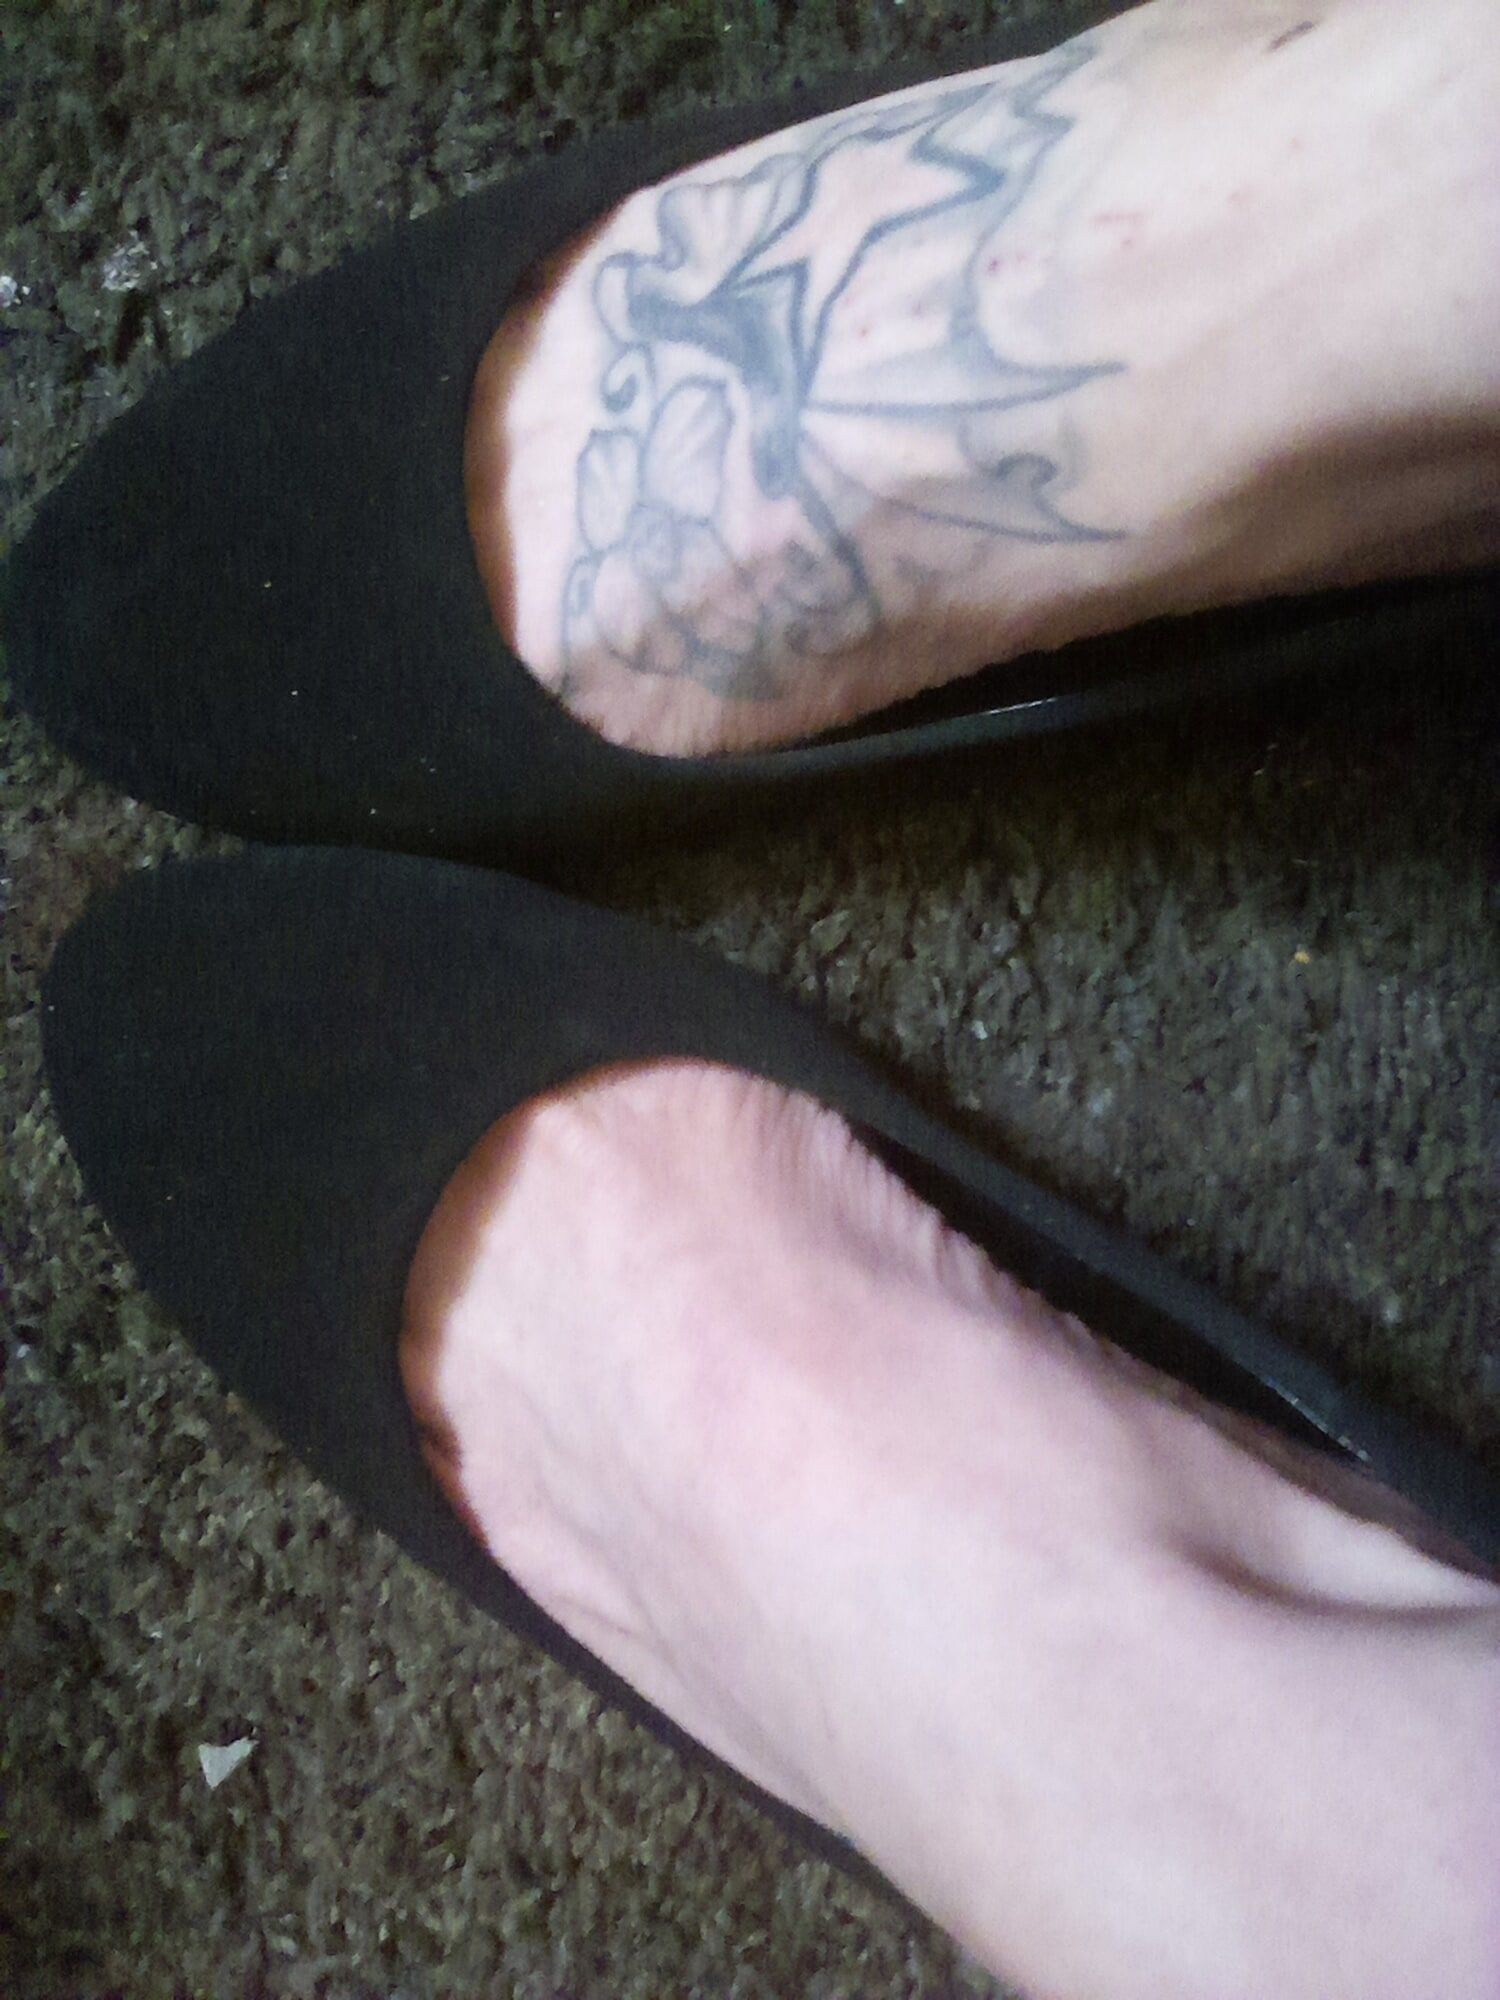 Tatted feet in heels #3